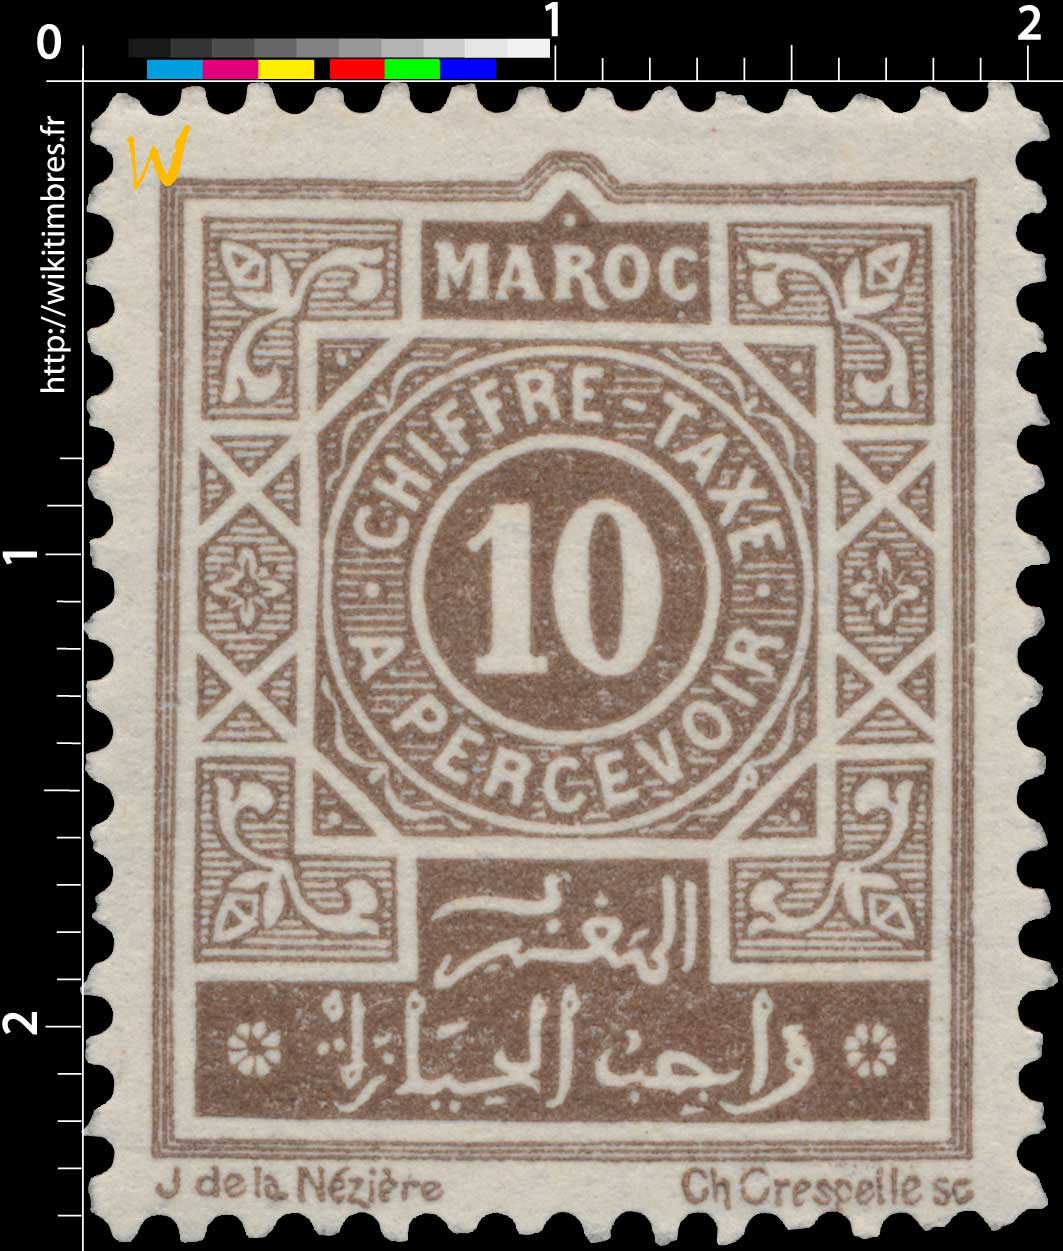 1917 Maroc - Chiffre Taxe à percevoir